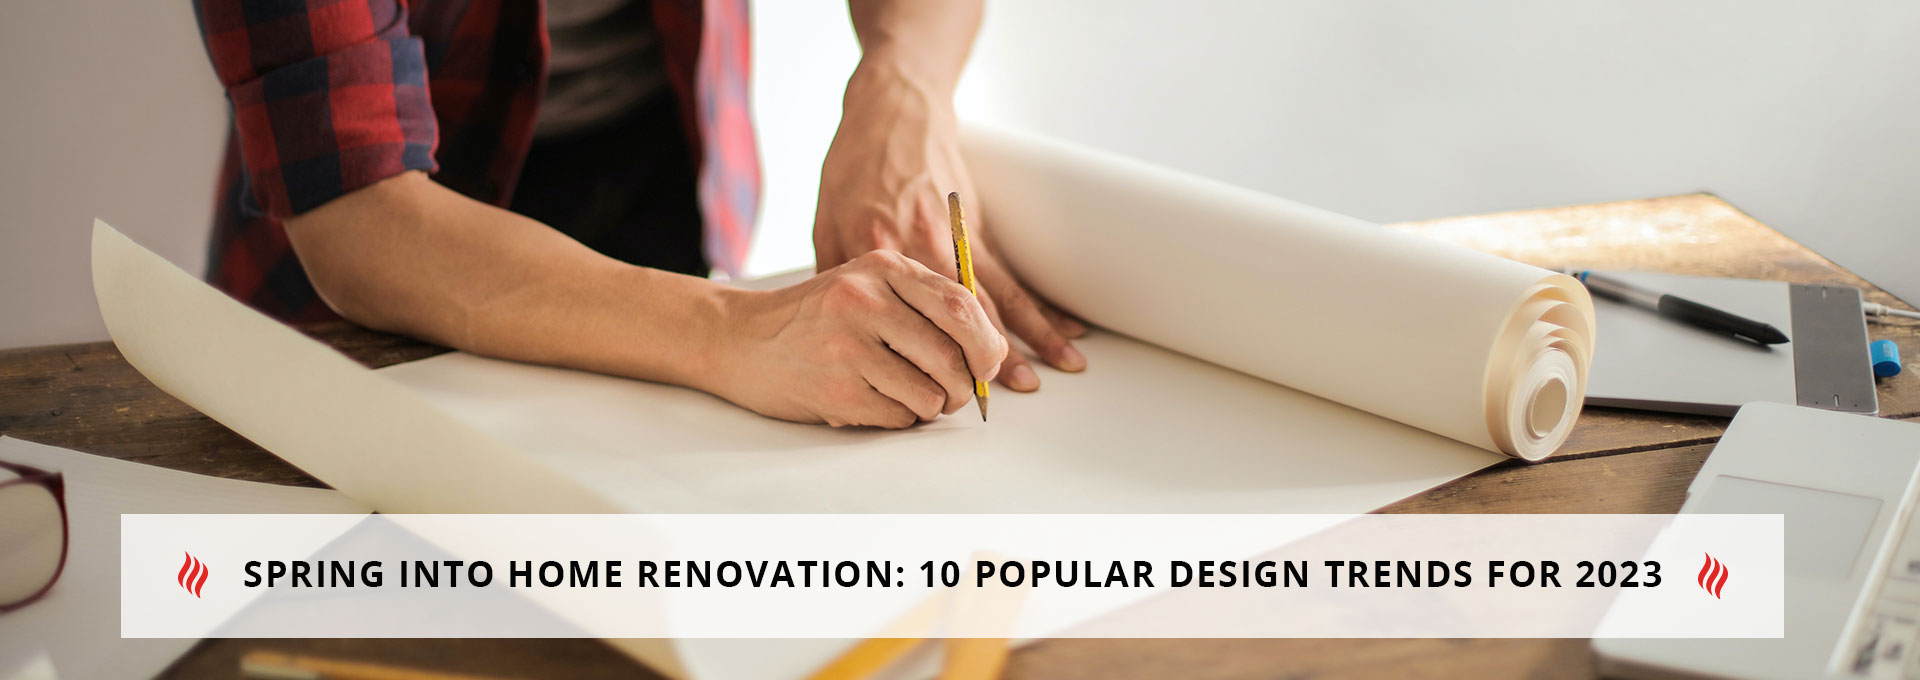 Spring Into Home Renovation: 10 Popular Design Trends For 2023 